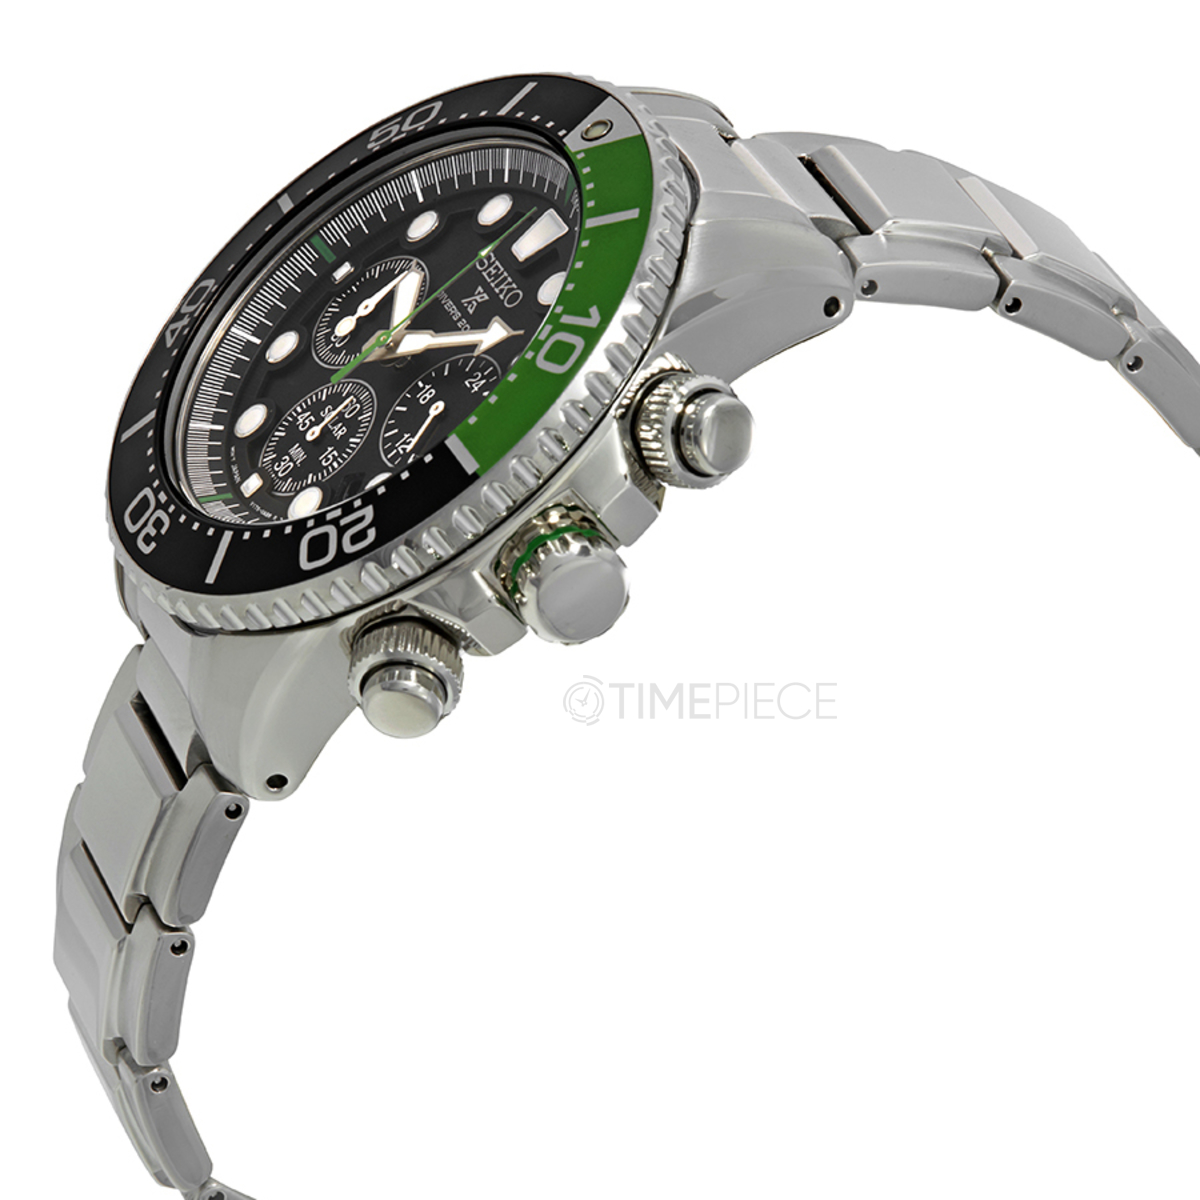 Seiko SSC615 Prospex Eco-Drive Watch